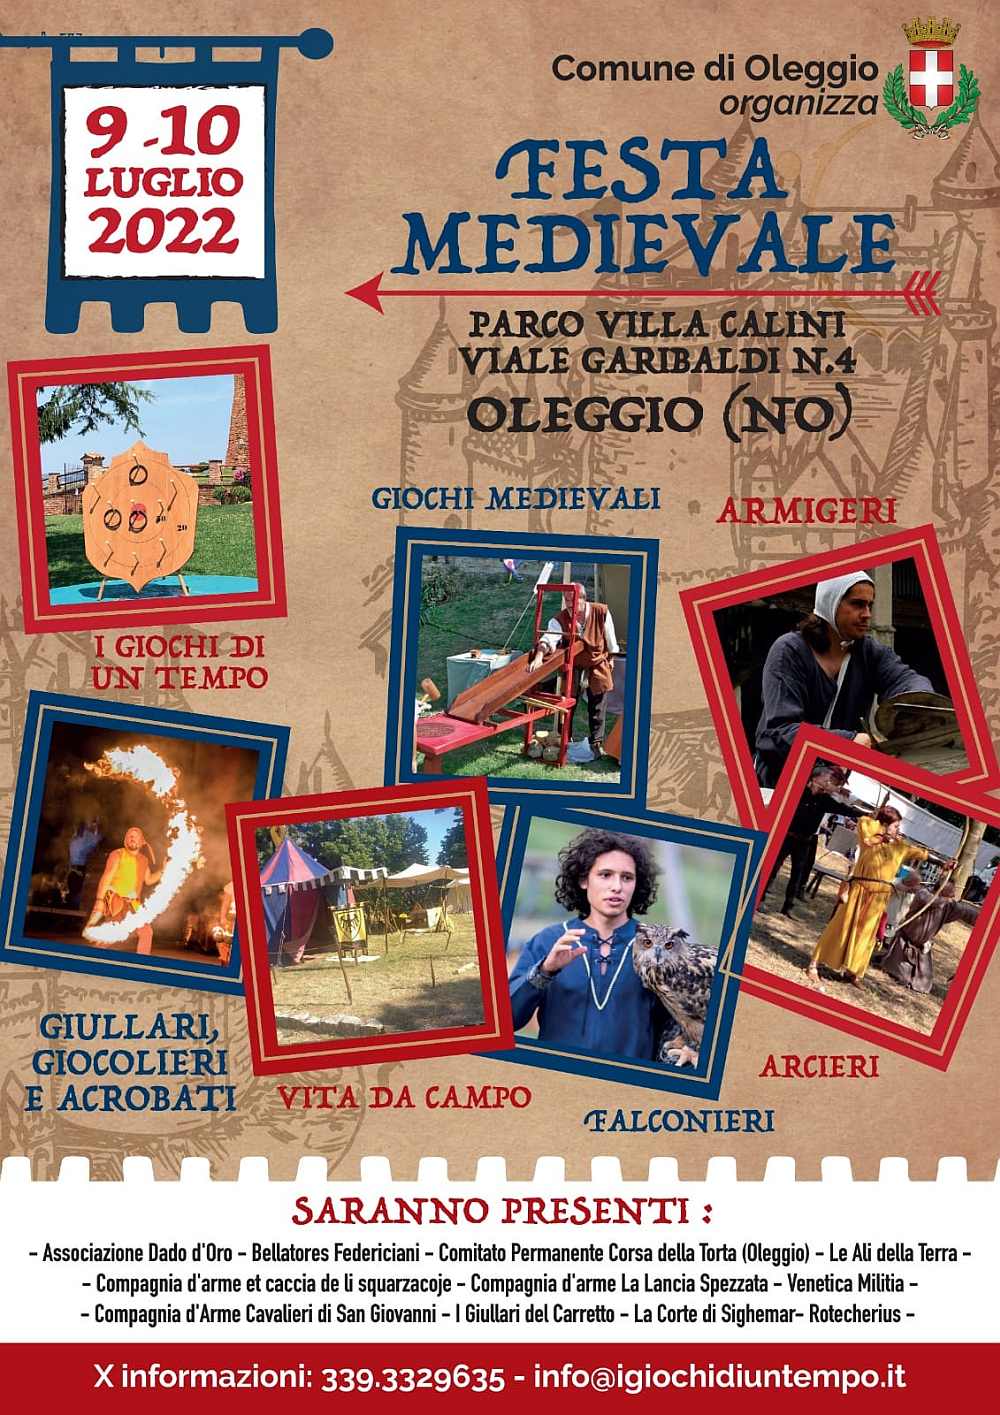 Oleggio (NO)
"Festa Medievale"
9-10 Luglio 2022
